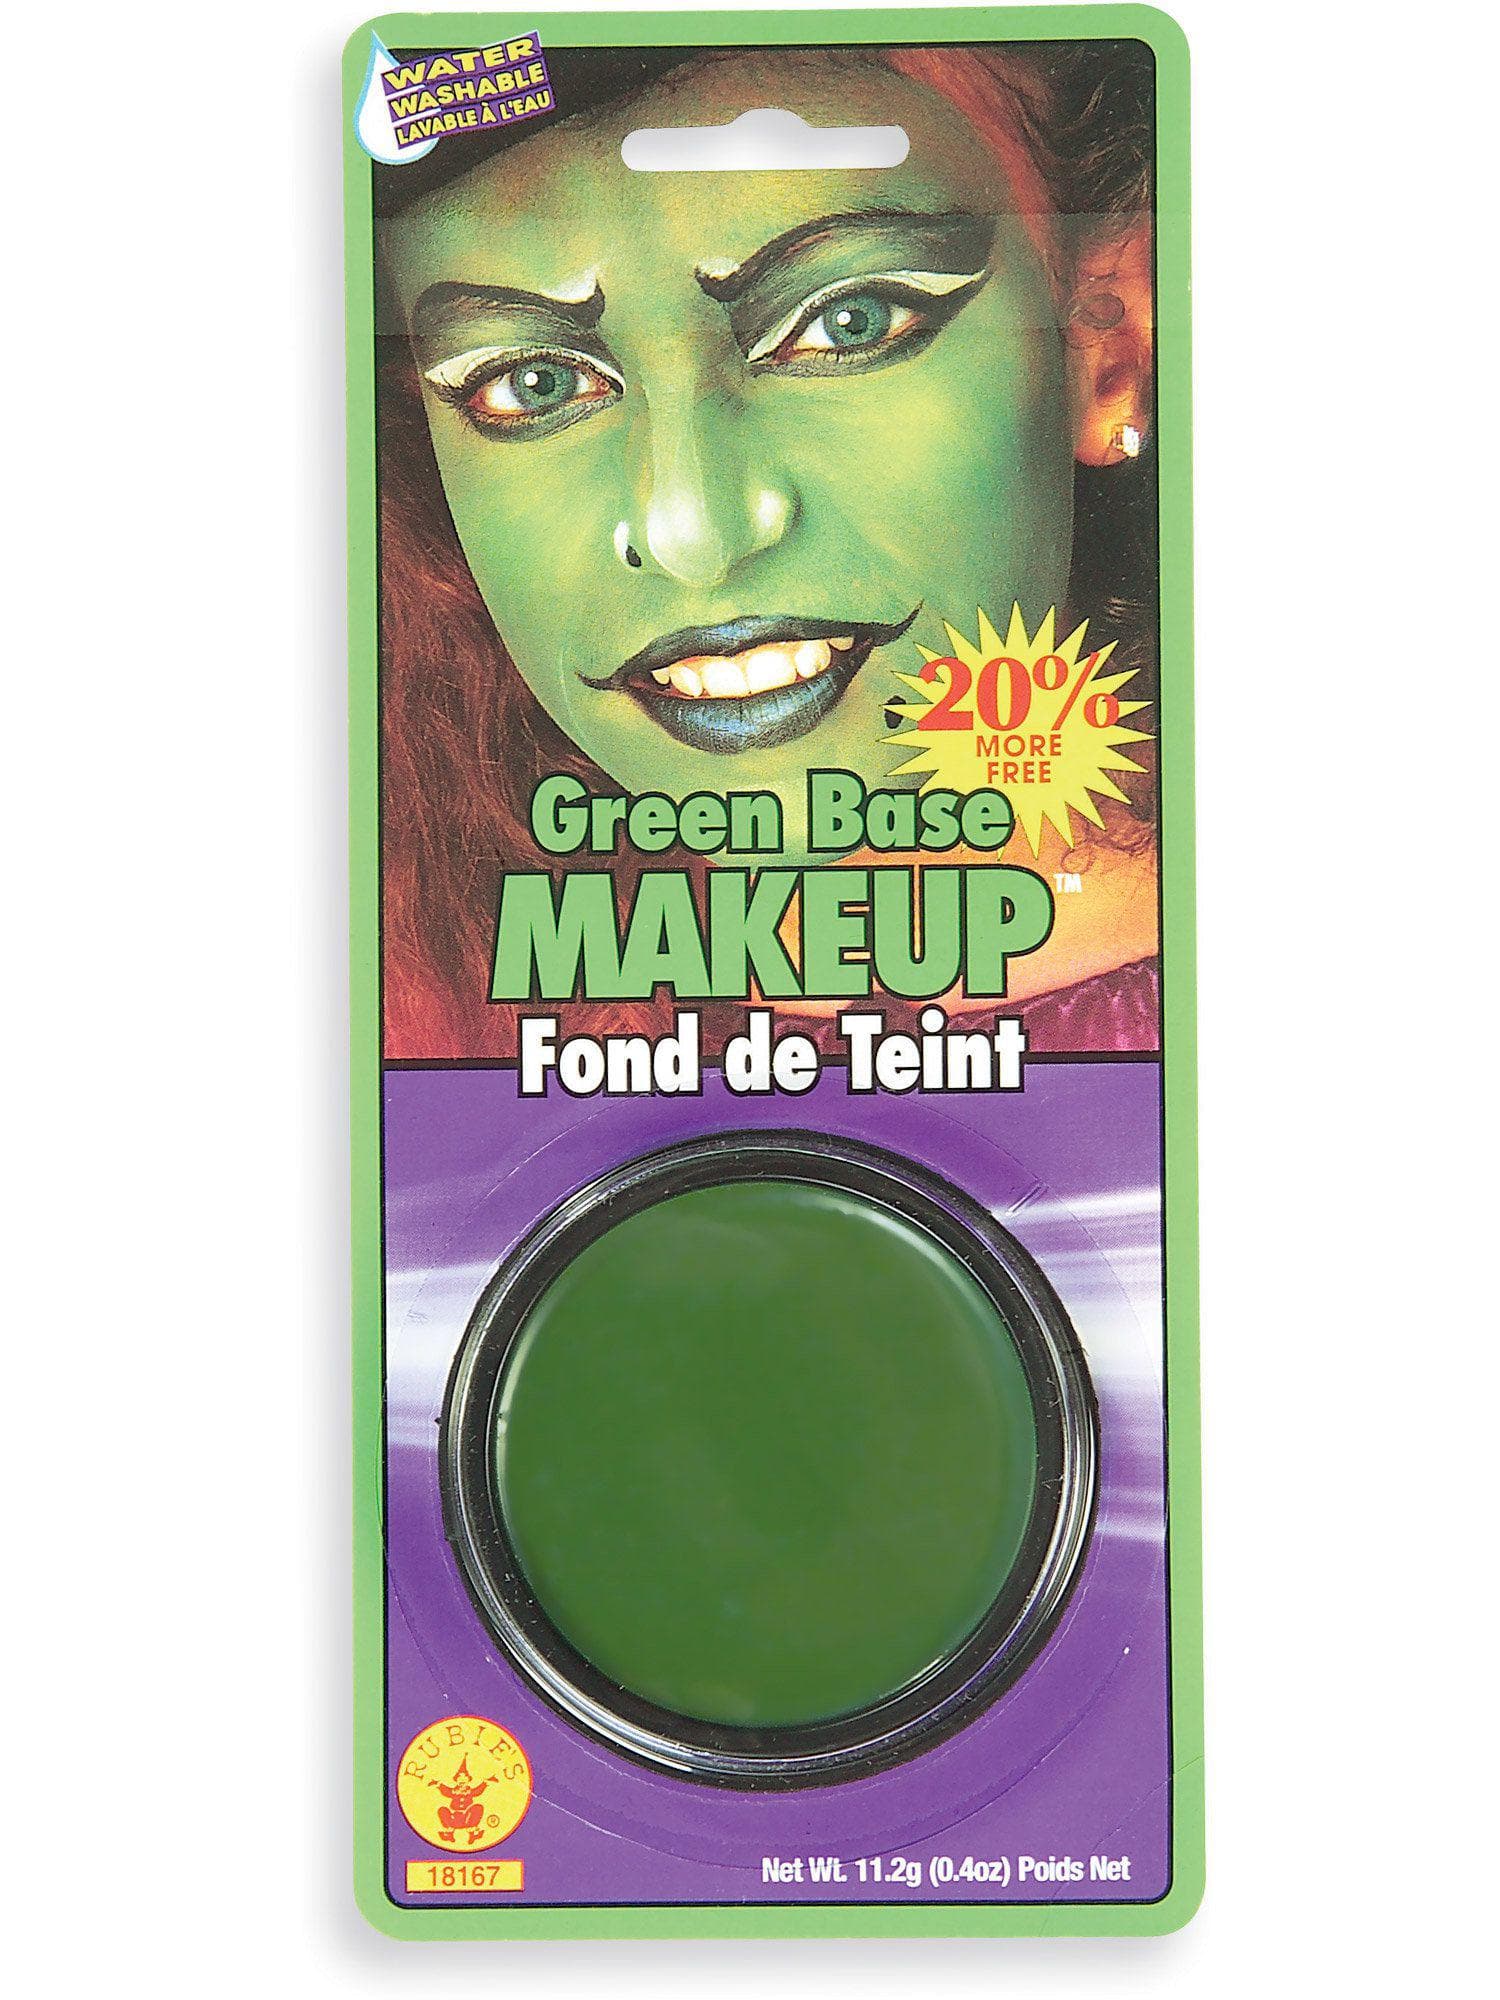 Green Grease Makeup - costumes.com